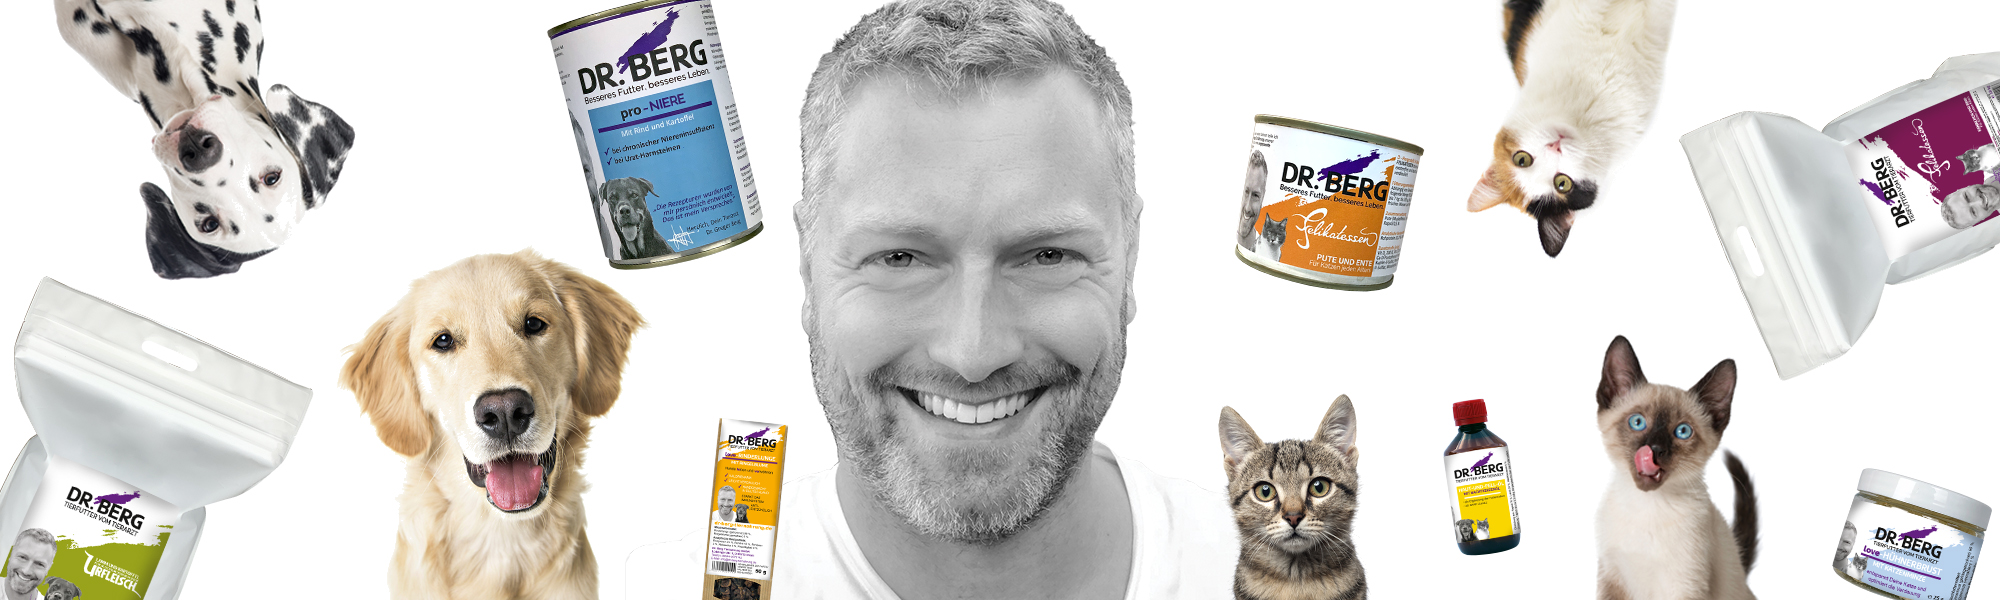 Banner: Dr. Berg Pet Food - Dog and Cat Food